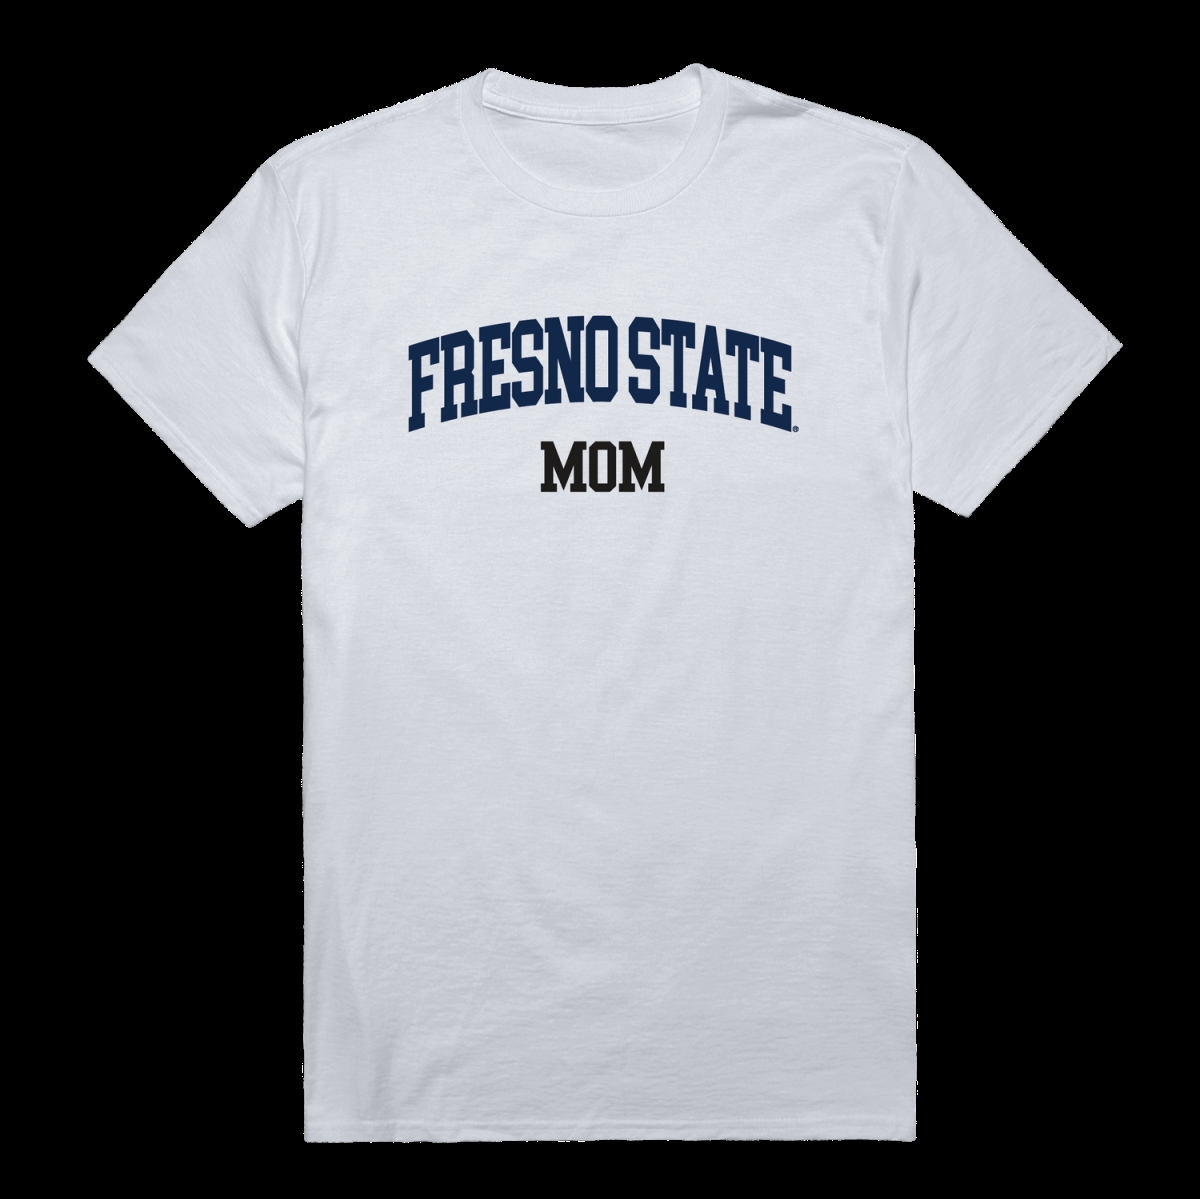 549-169-WT2-02 California State University, Fresno Bulldogs College Mom T-Shirt, White - Medium -  W Republic